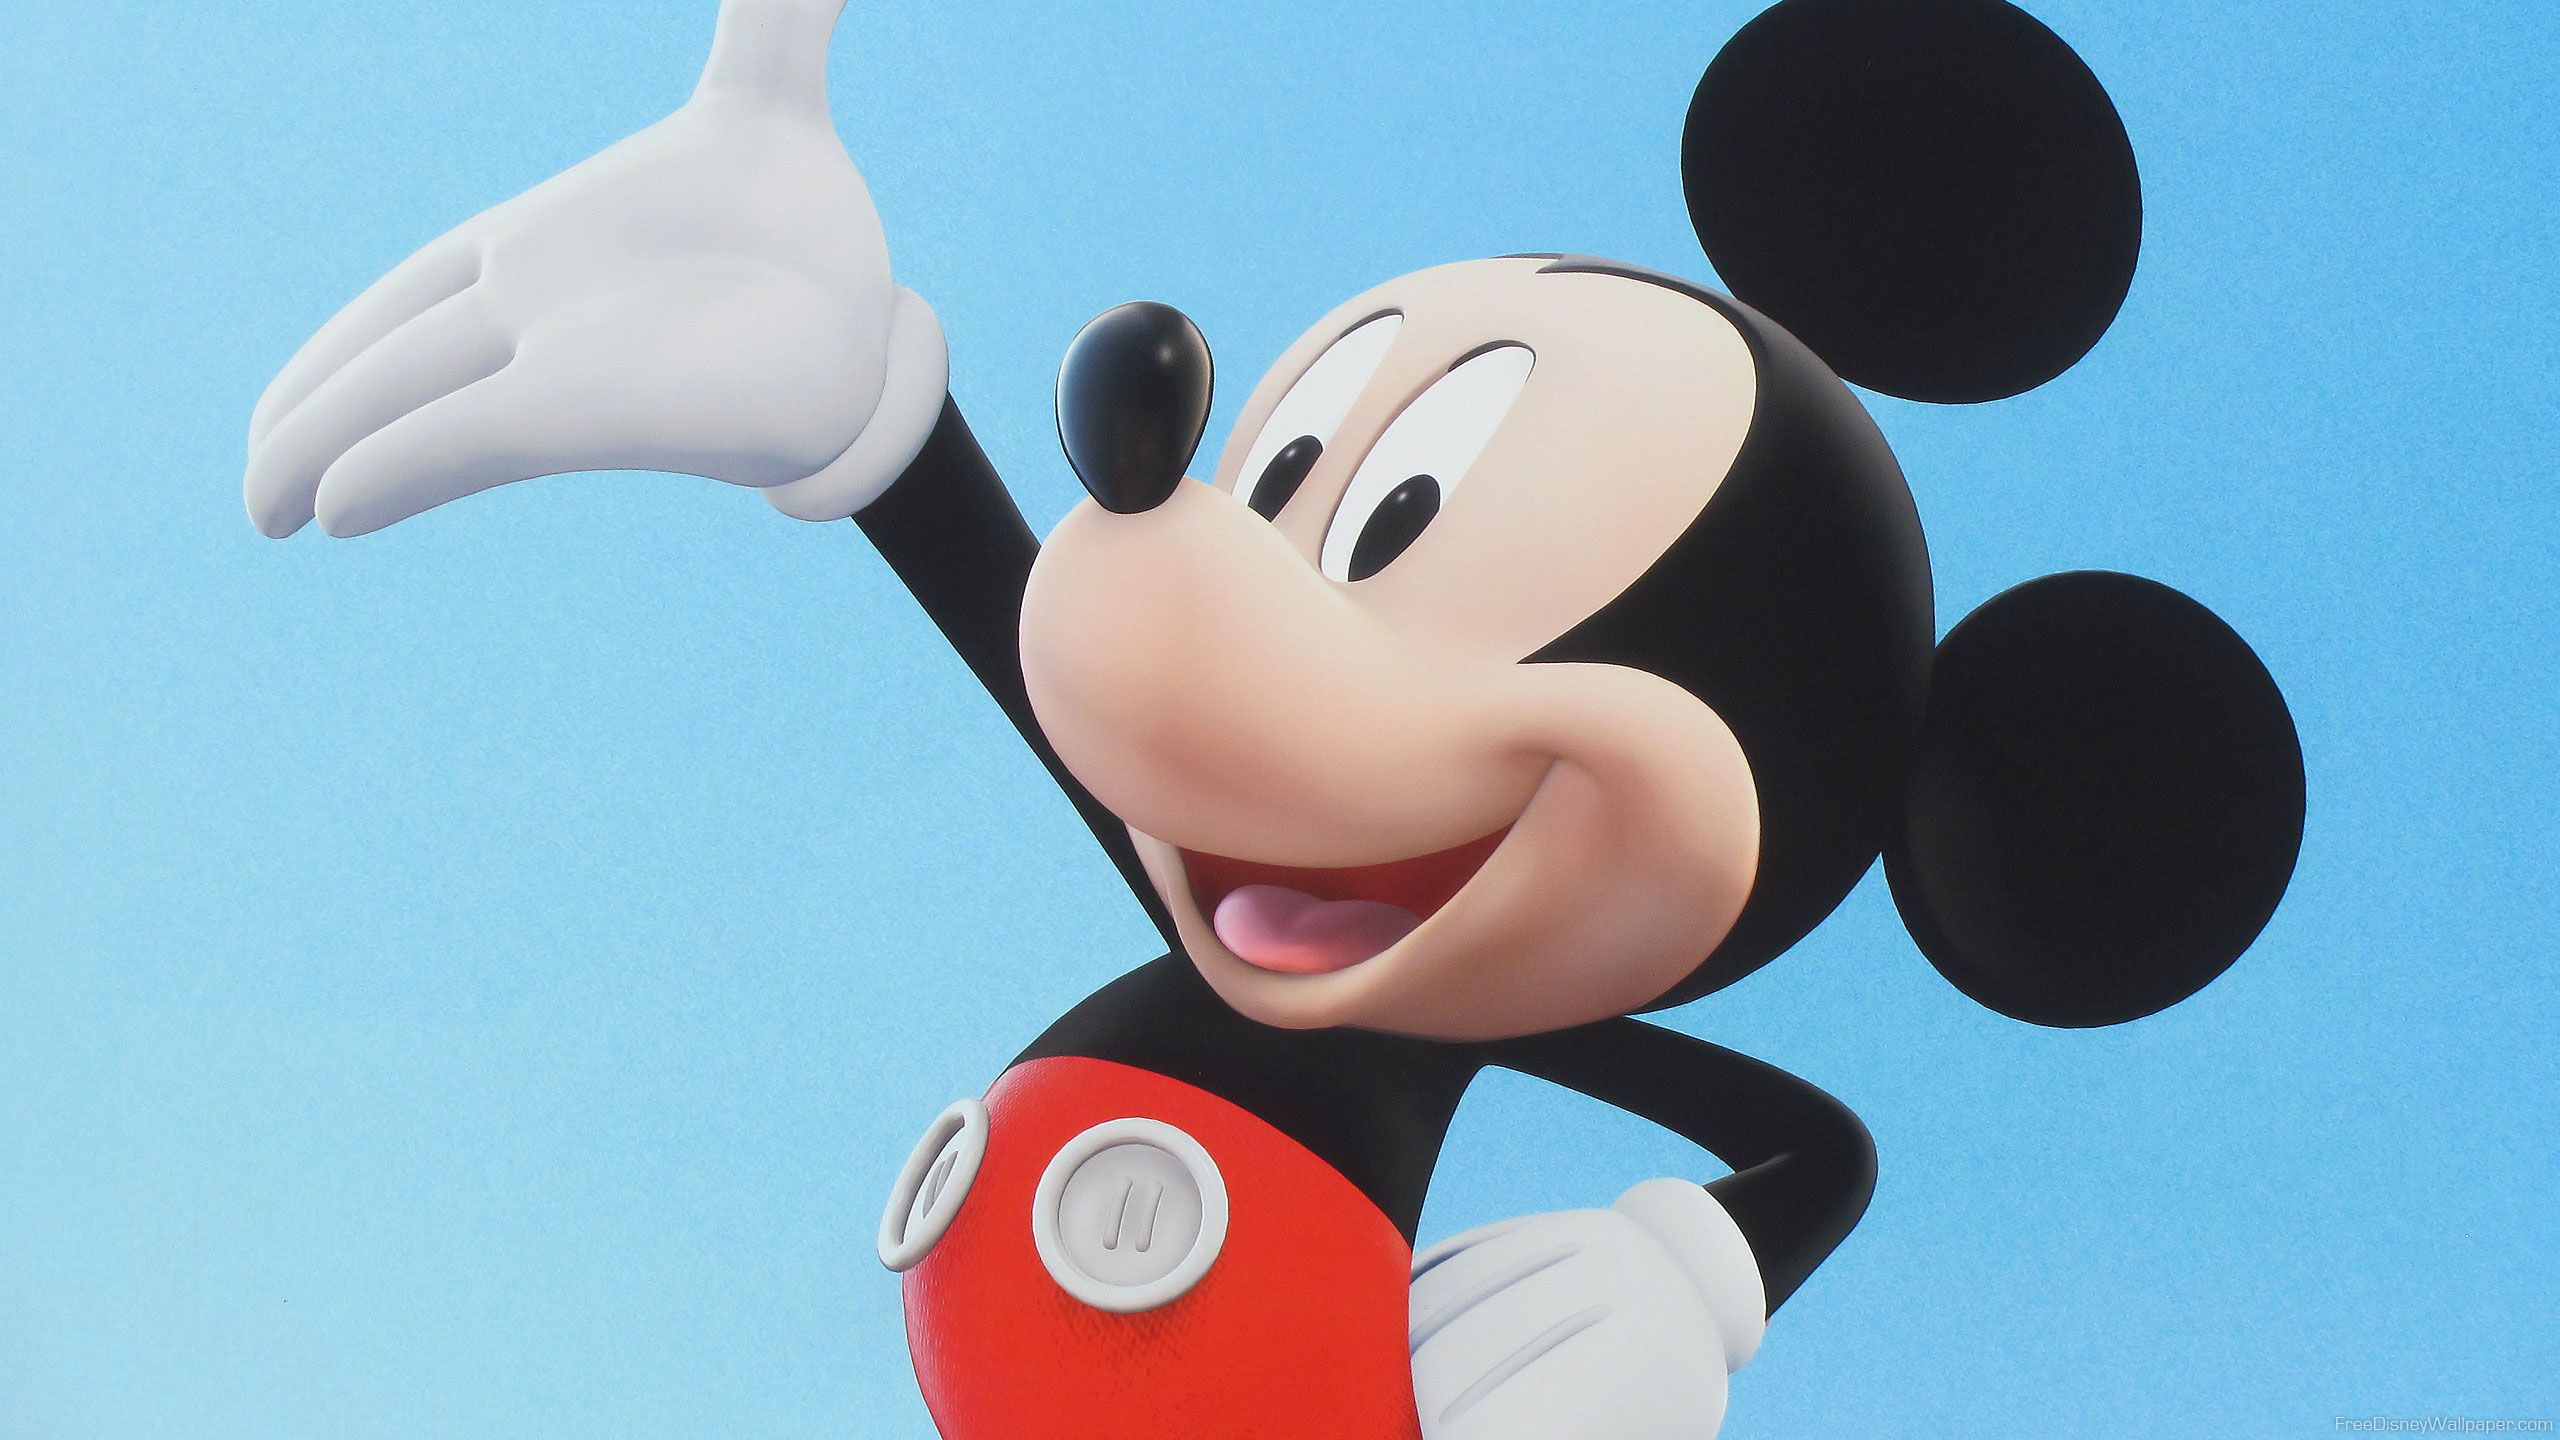 Mickey Mouse Wallpaper para iPhone 6 - Dibujos animados Fondos